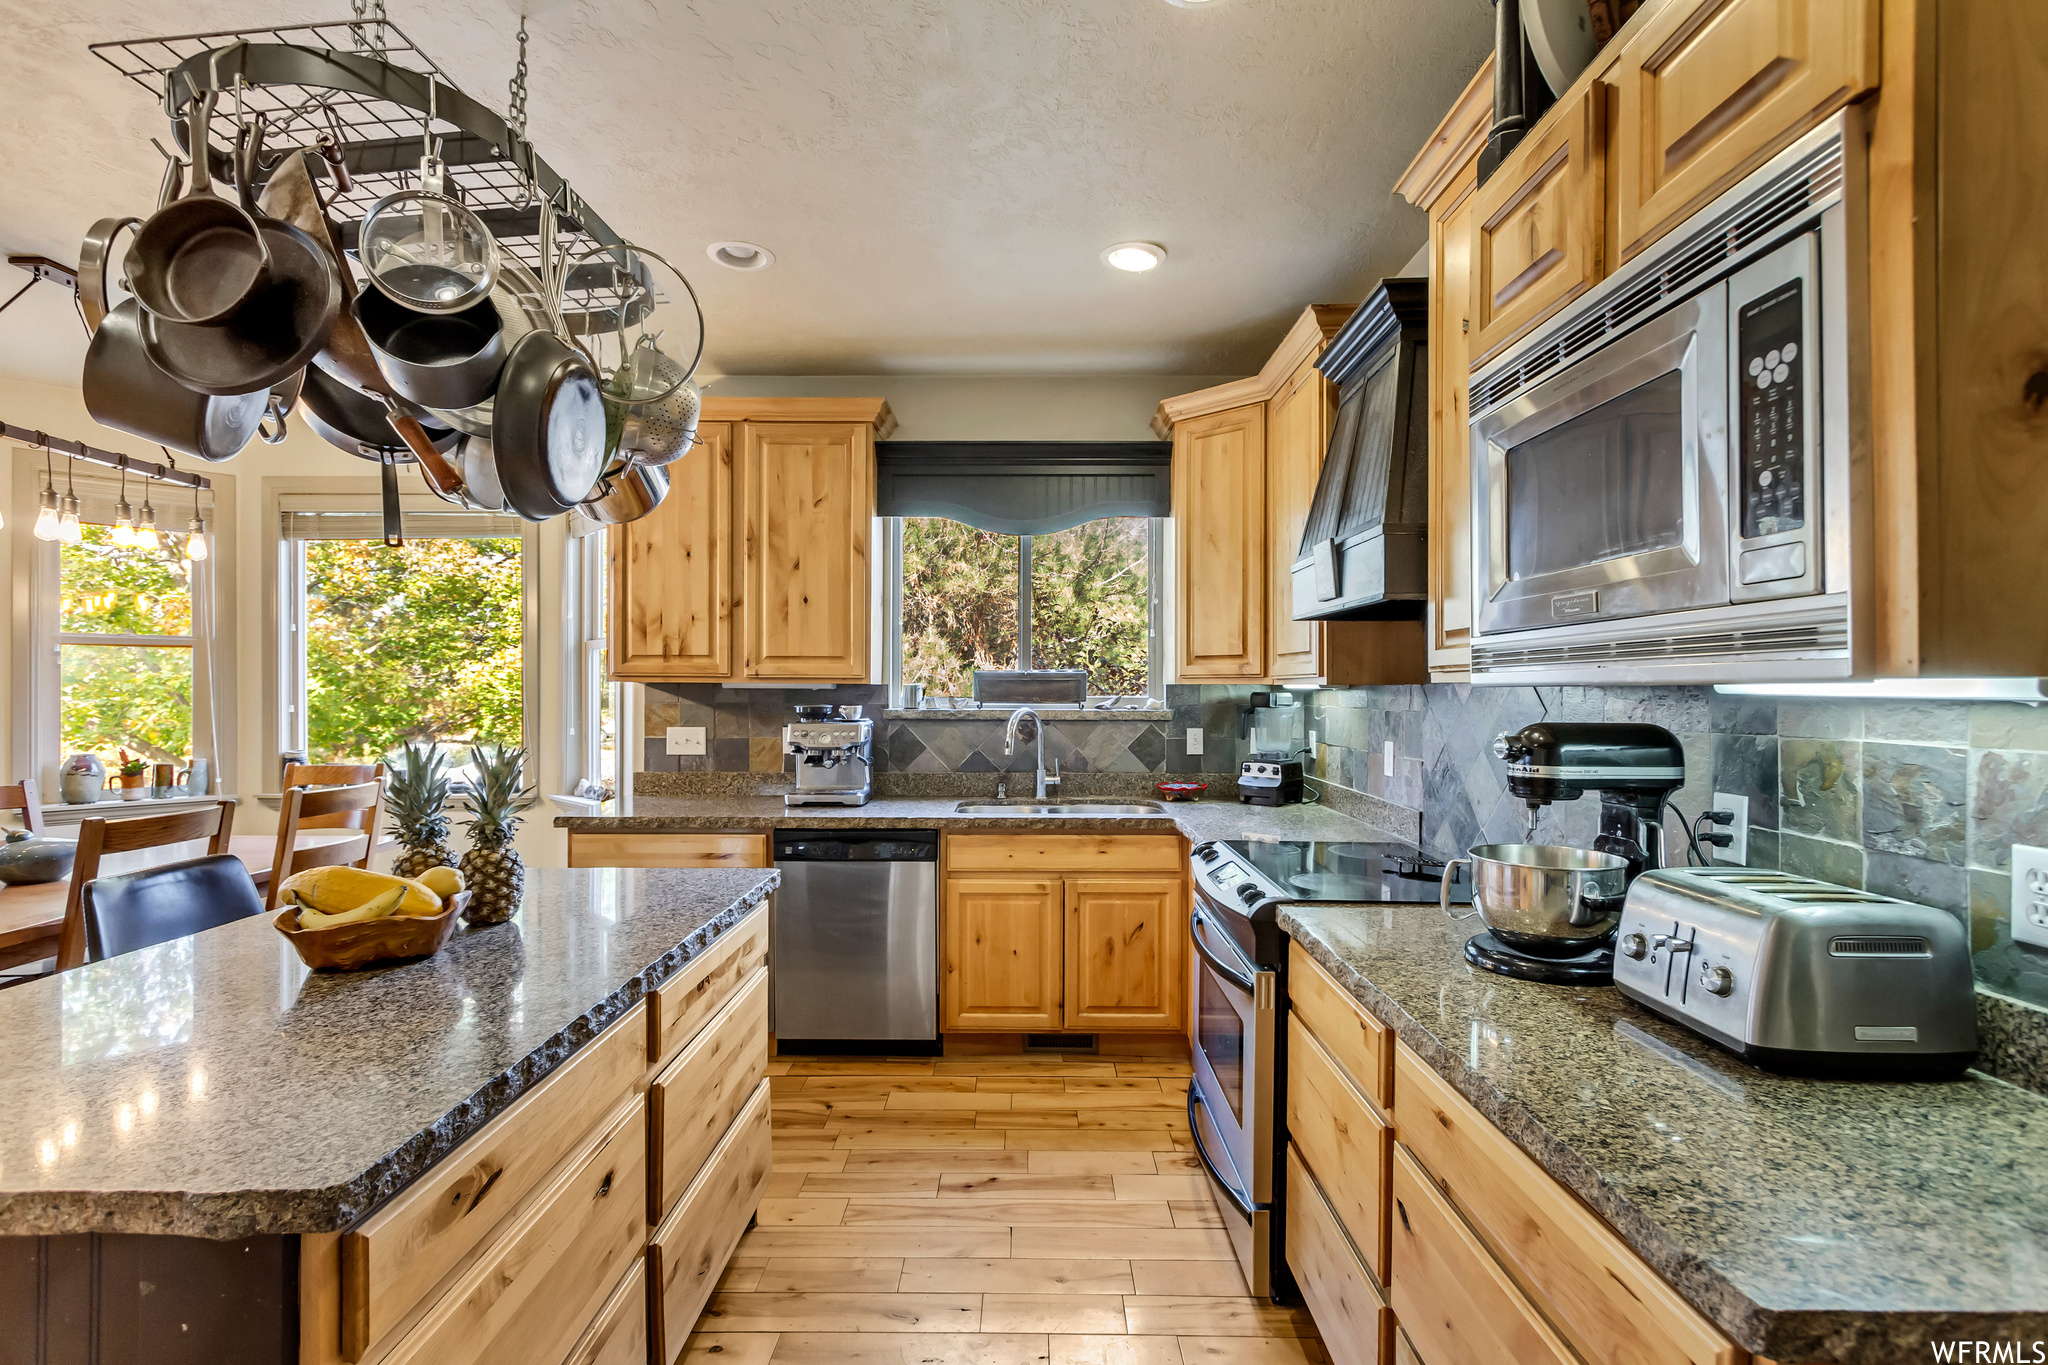 Kitchen with light hardwood / wood-style floors, backsplash, stainless steel appliances, and a kitchen island